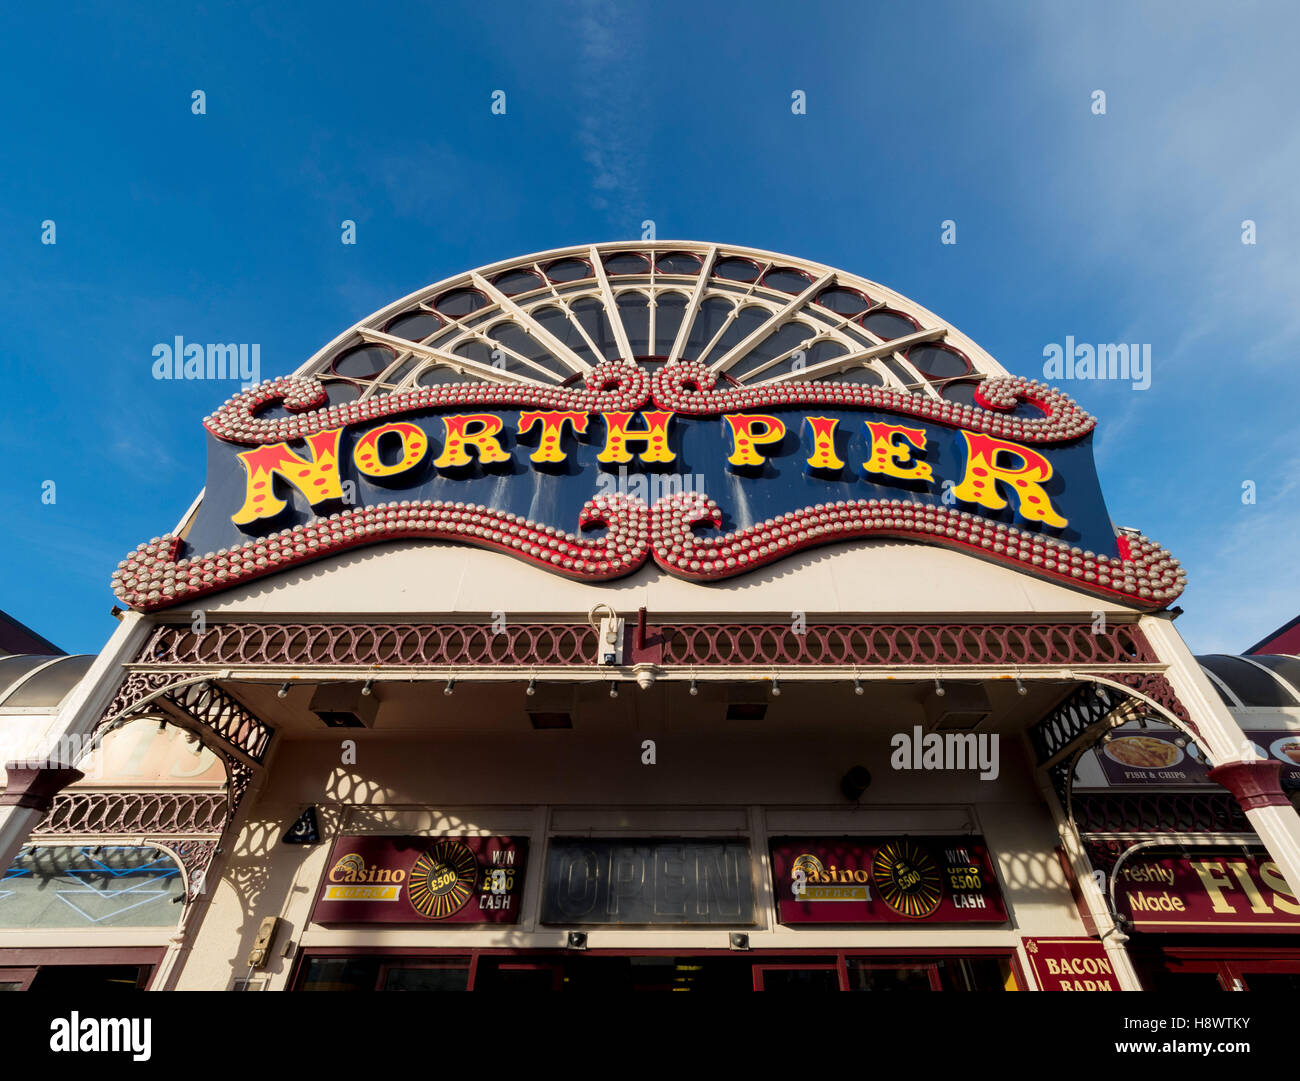 North Pier sign above entrance, Blackpool, Lancashire, UK. Stock Photo